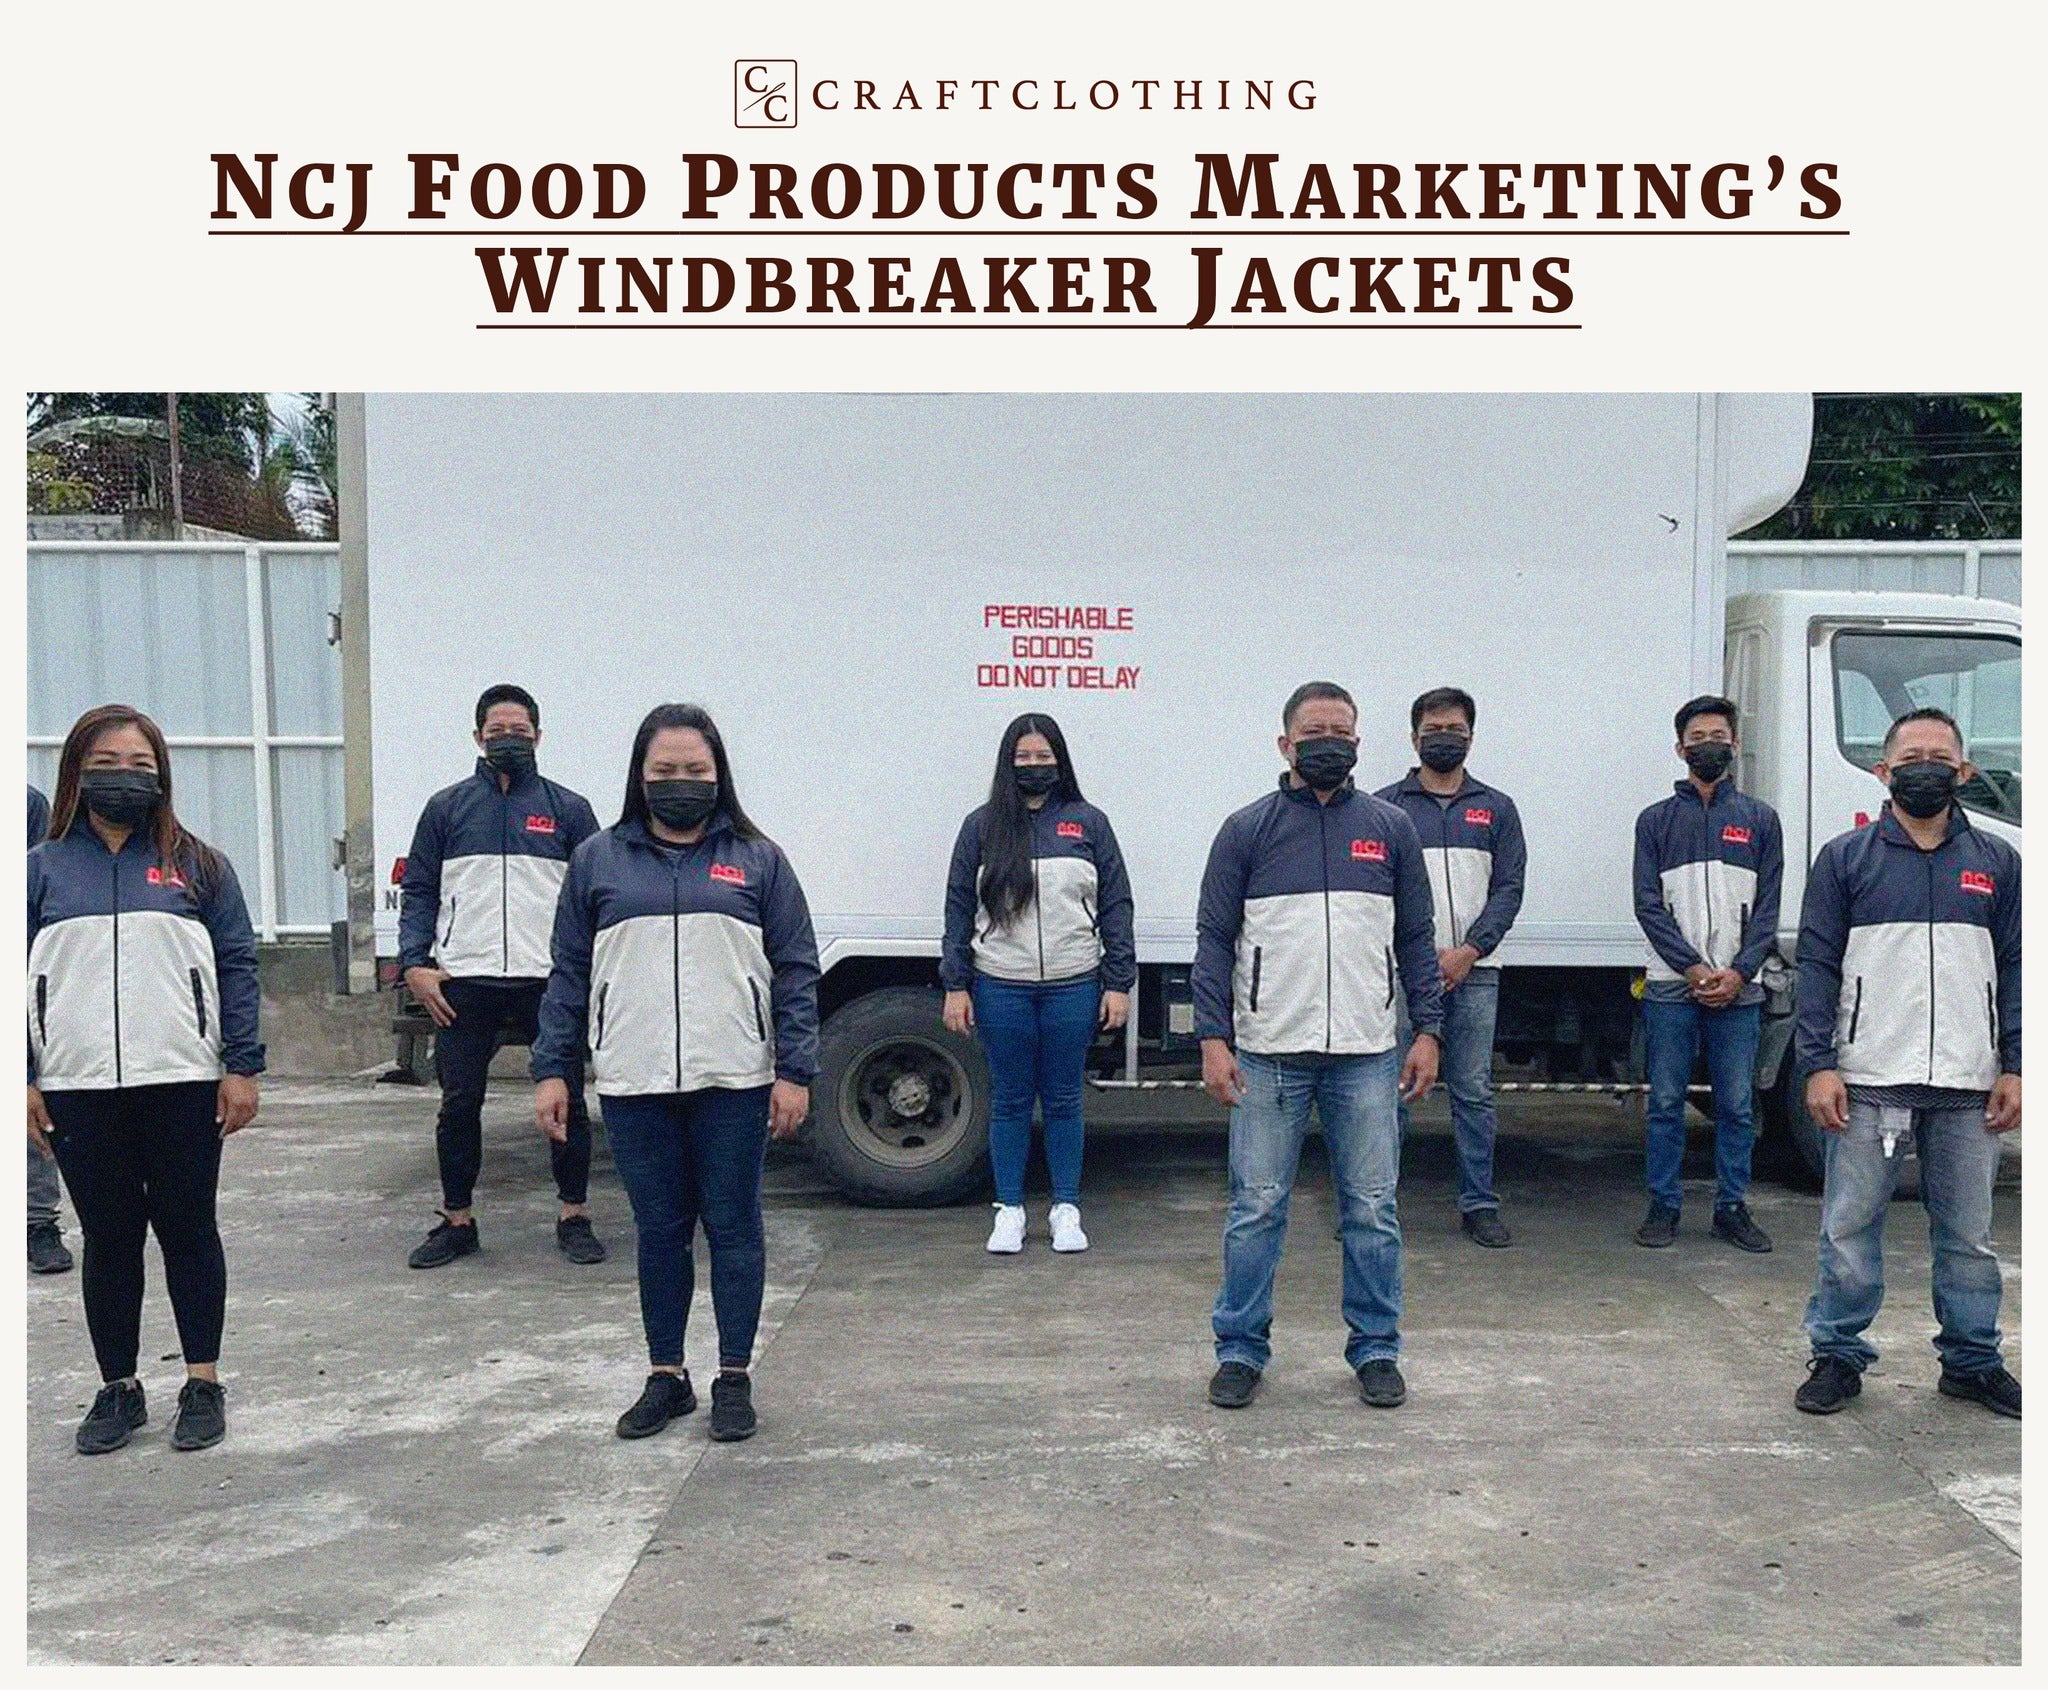 NCJ FOOD PRODUCTS MARKETING'S WINDBREAKER JACKETS